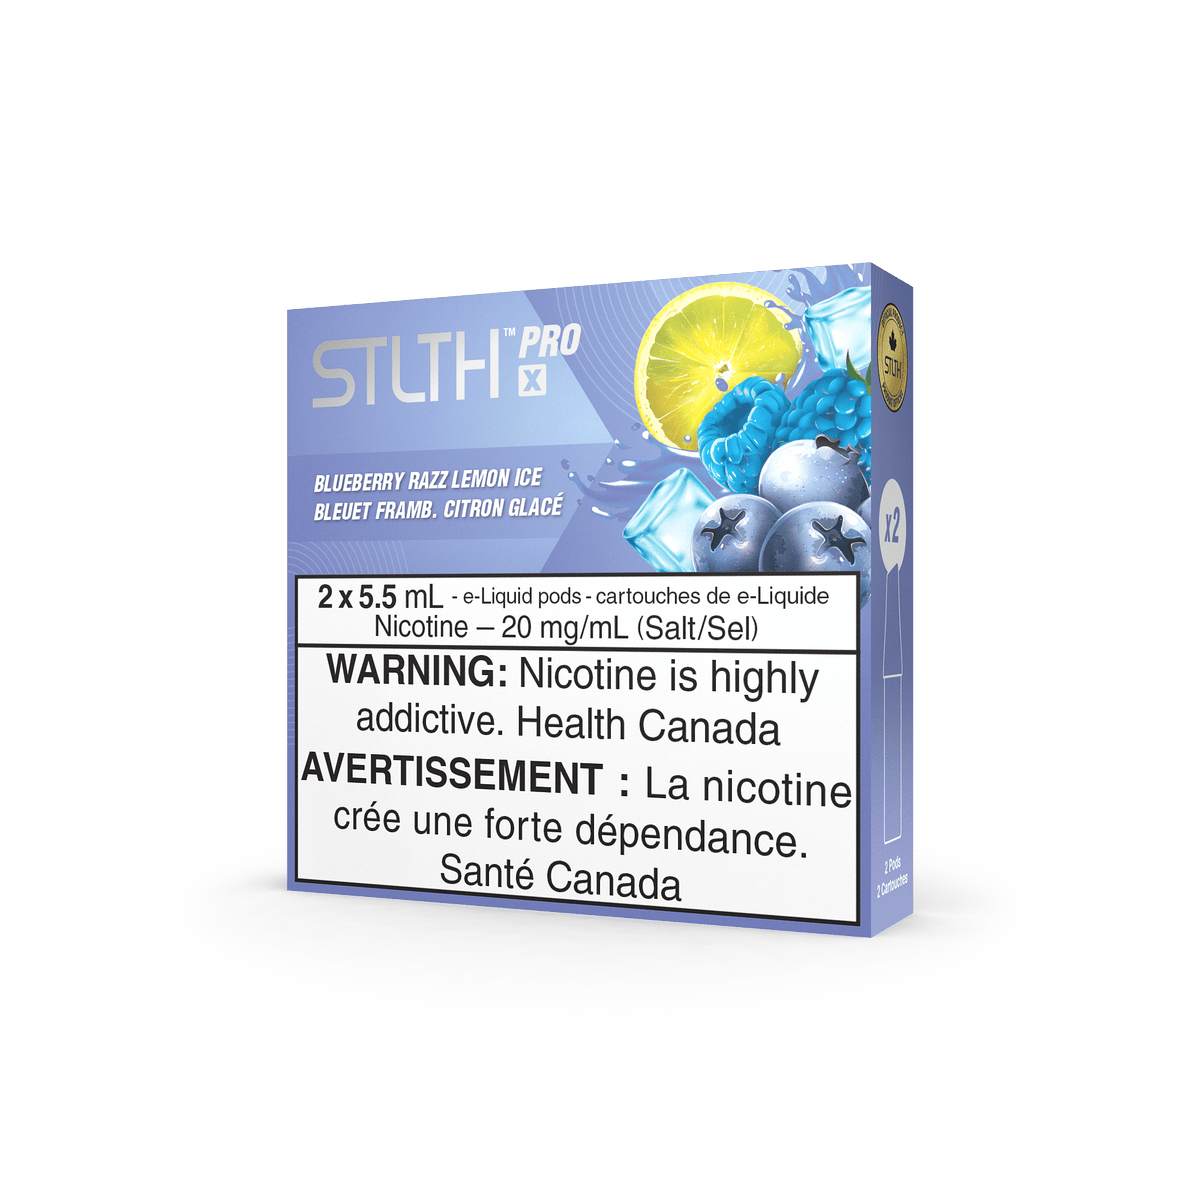 STLTH Pro X - Blueberry Razz Lemon Ice Vape Pod available on Canada online vape shop